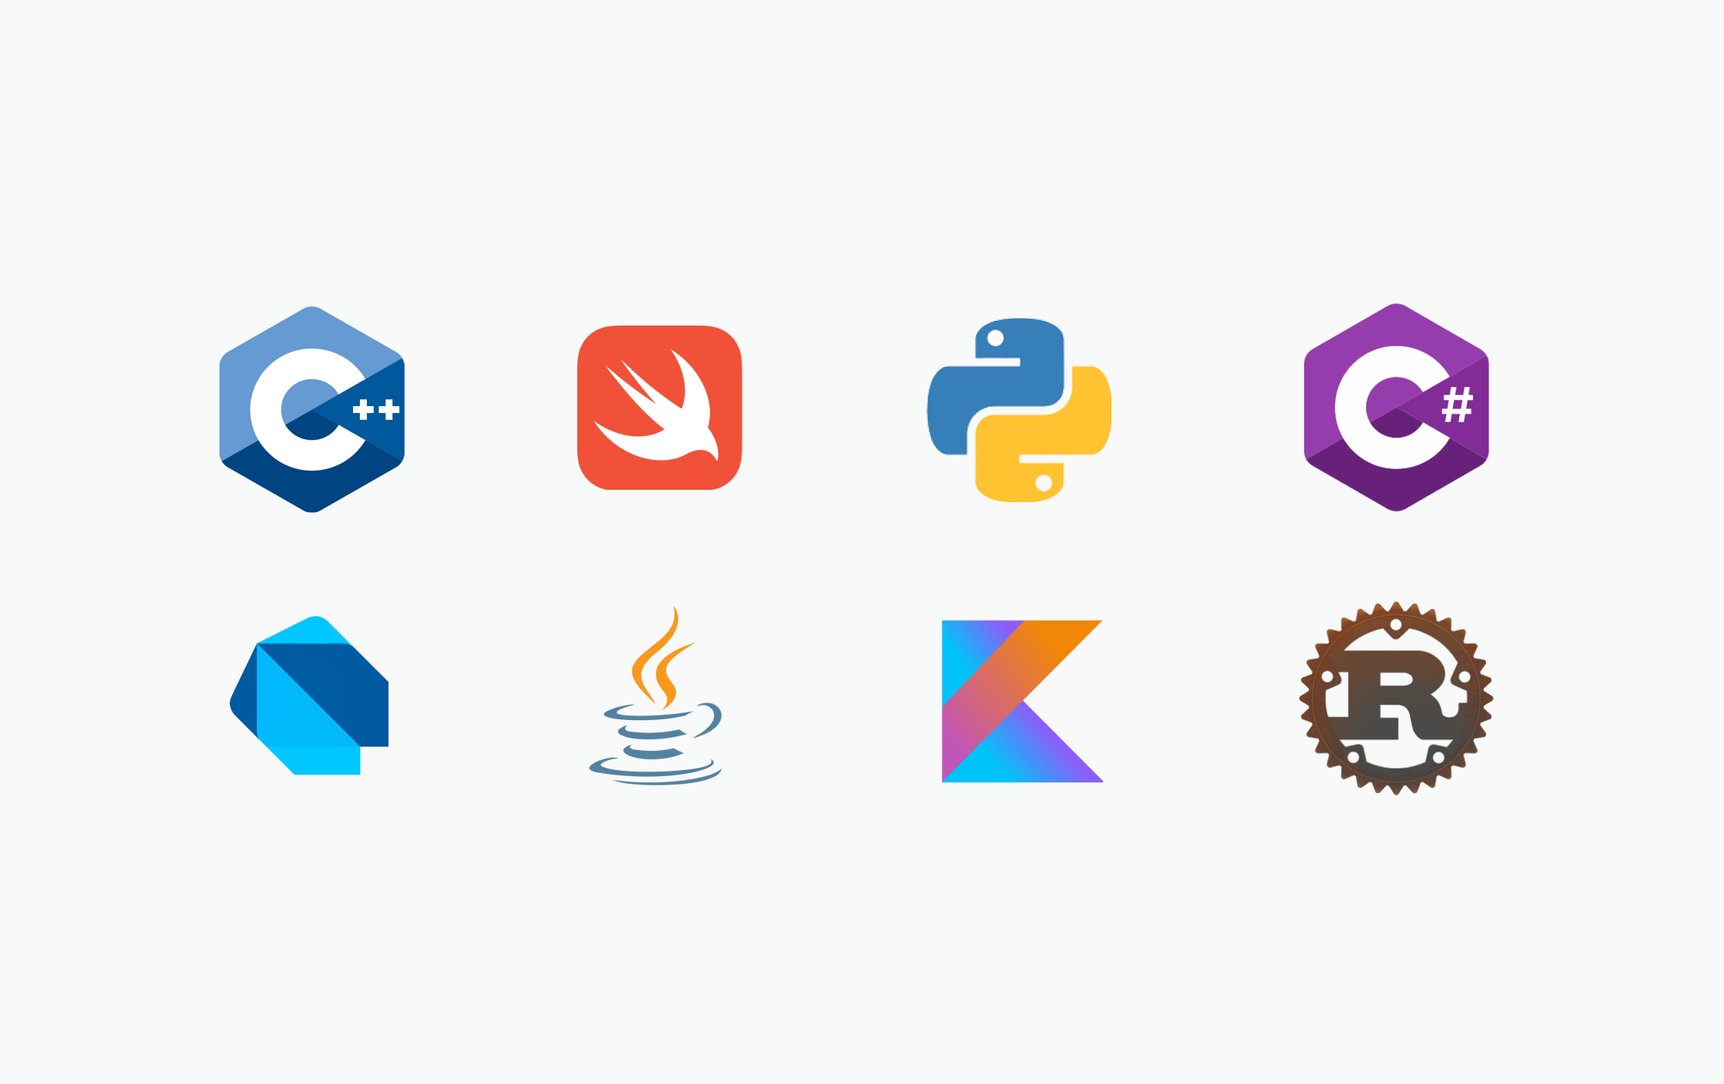 Logos  for C++, Swift, Python, C#, Dart,  Java, Kotlin, Rust